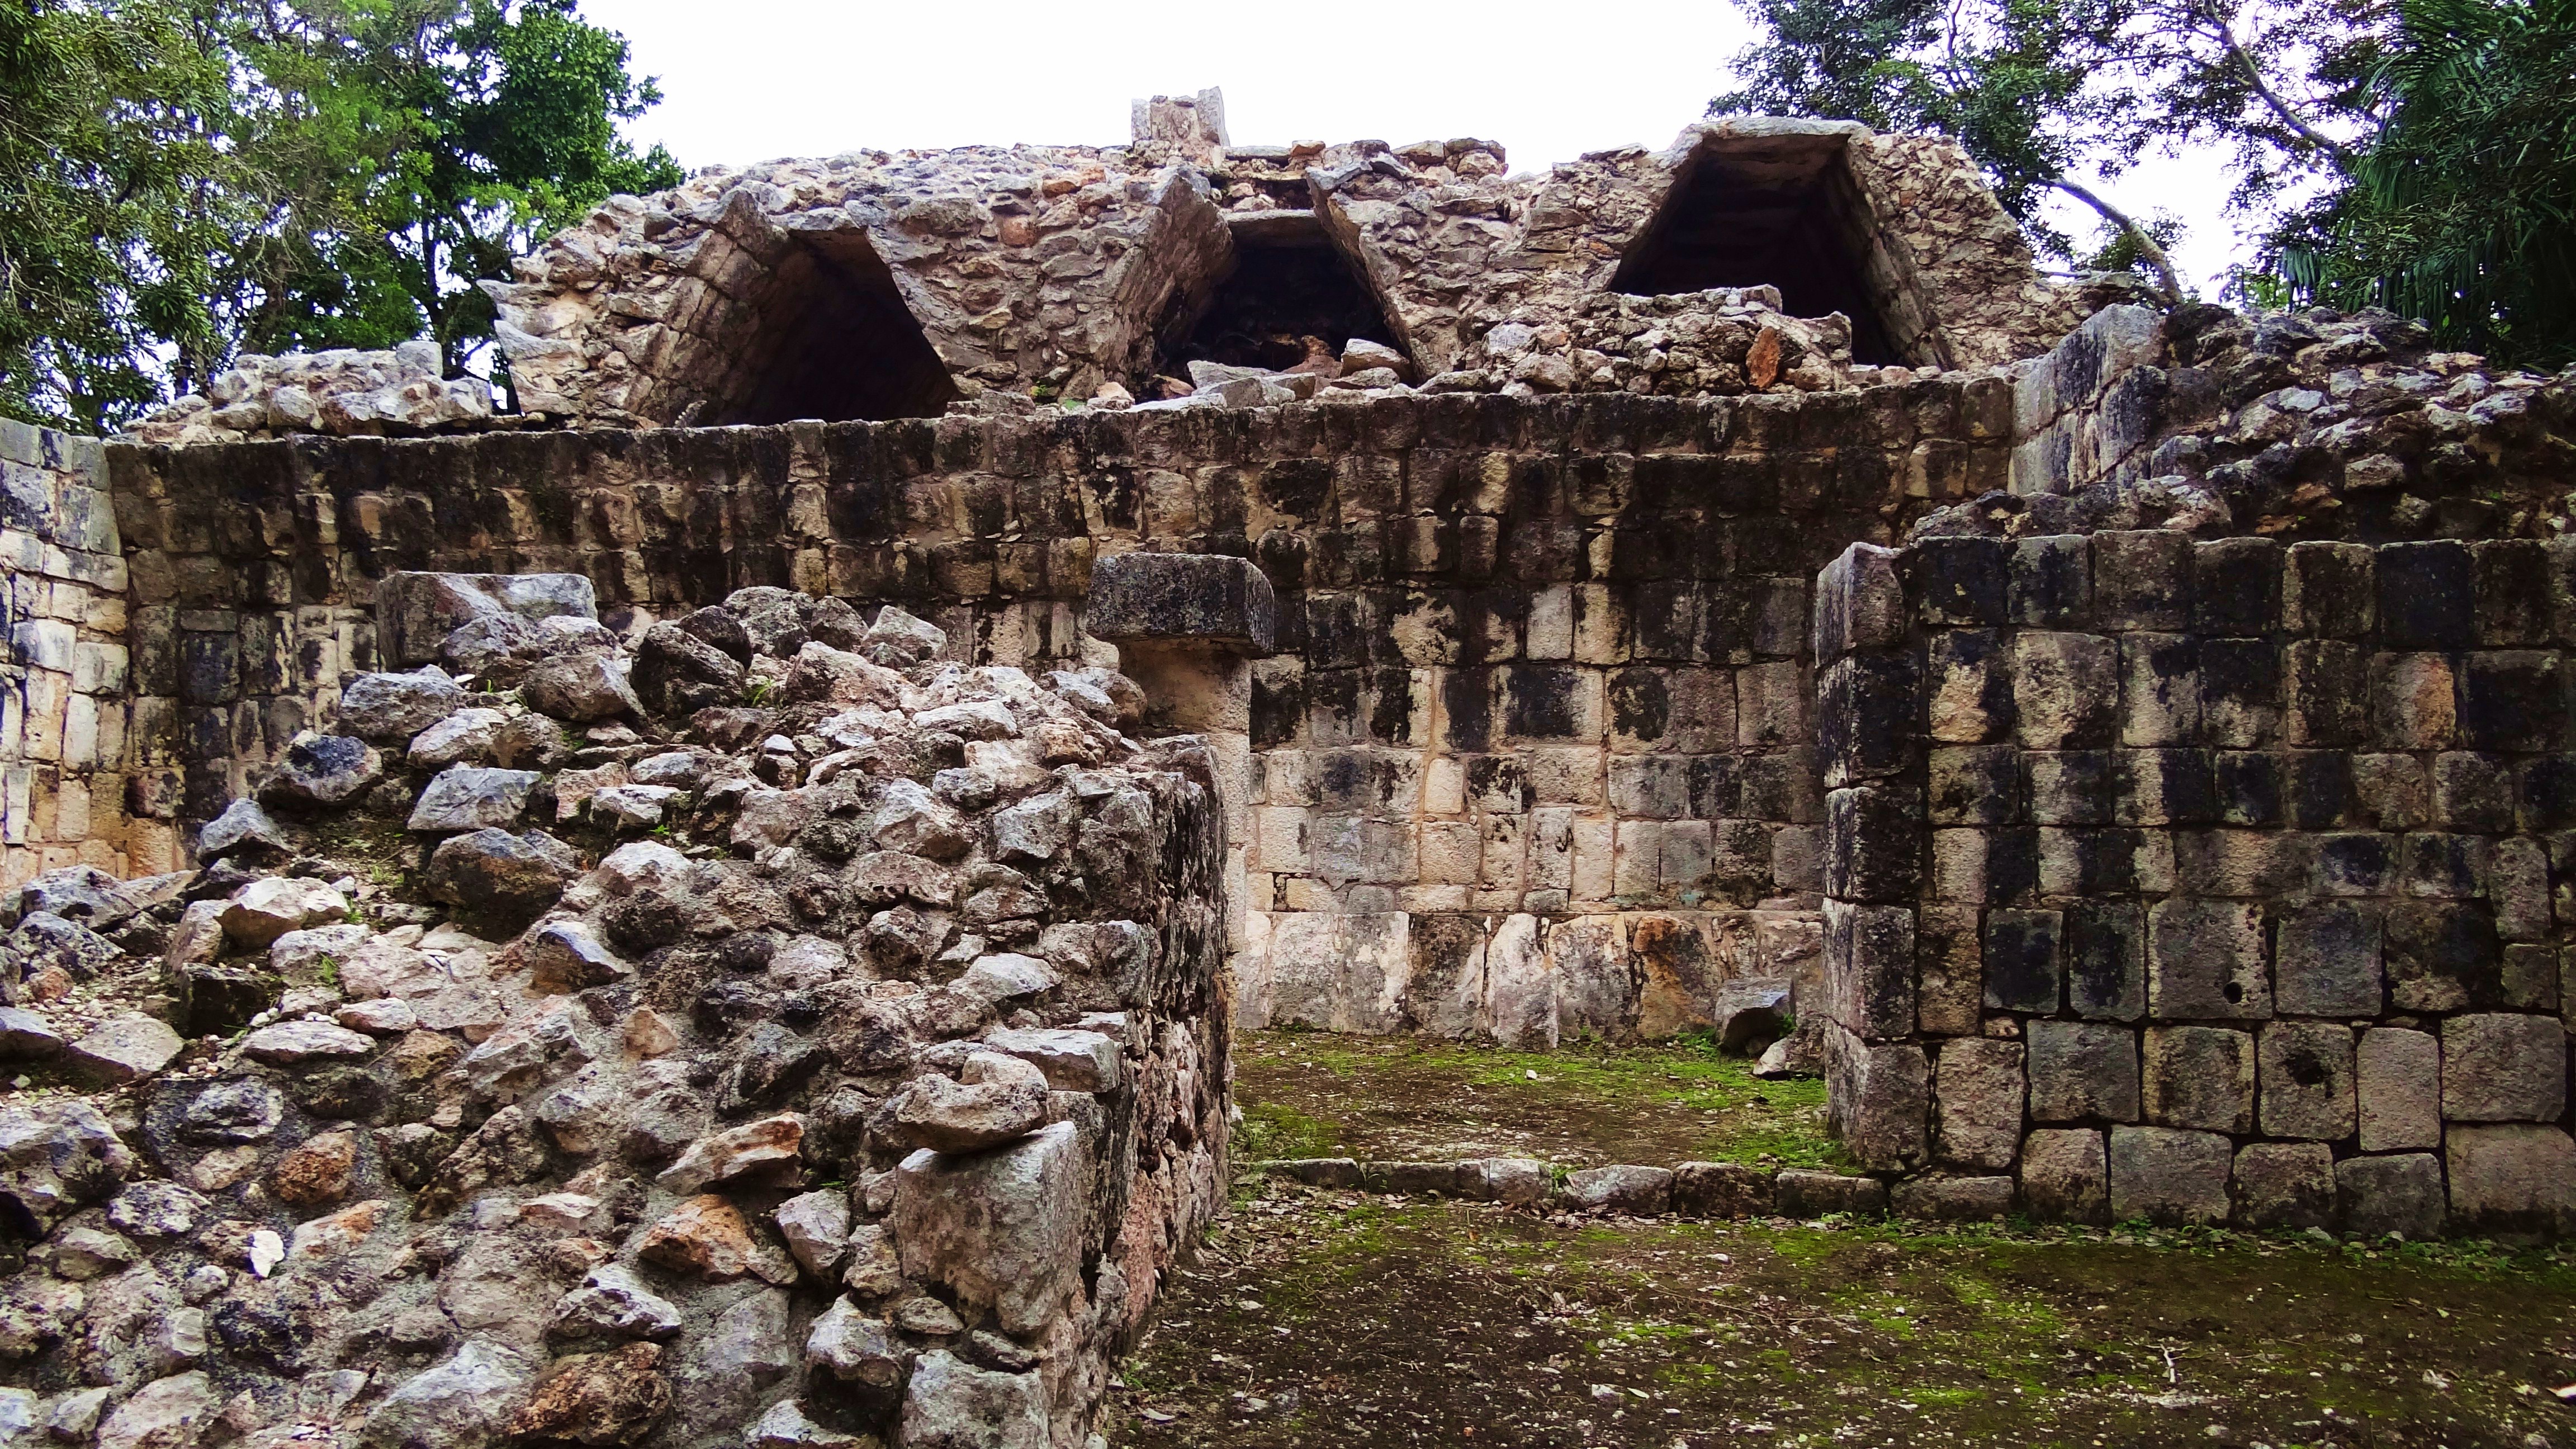 Foto: Yacimiento Arqueológico Chichén Itzá - Tinum (Yucatán), México